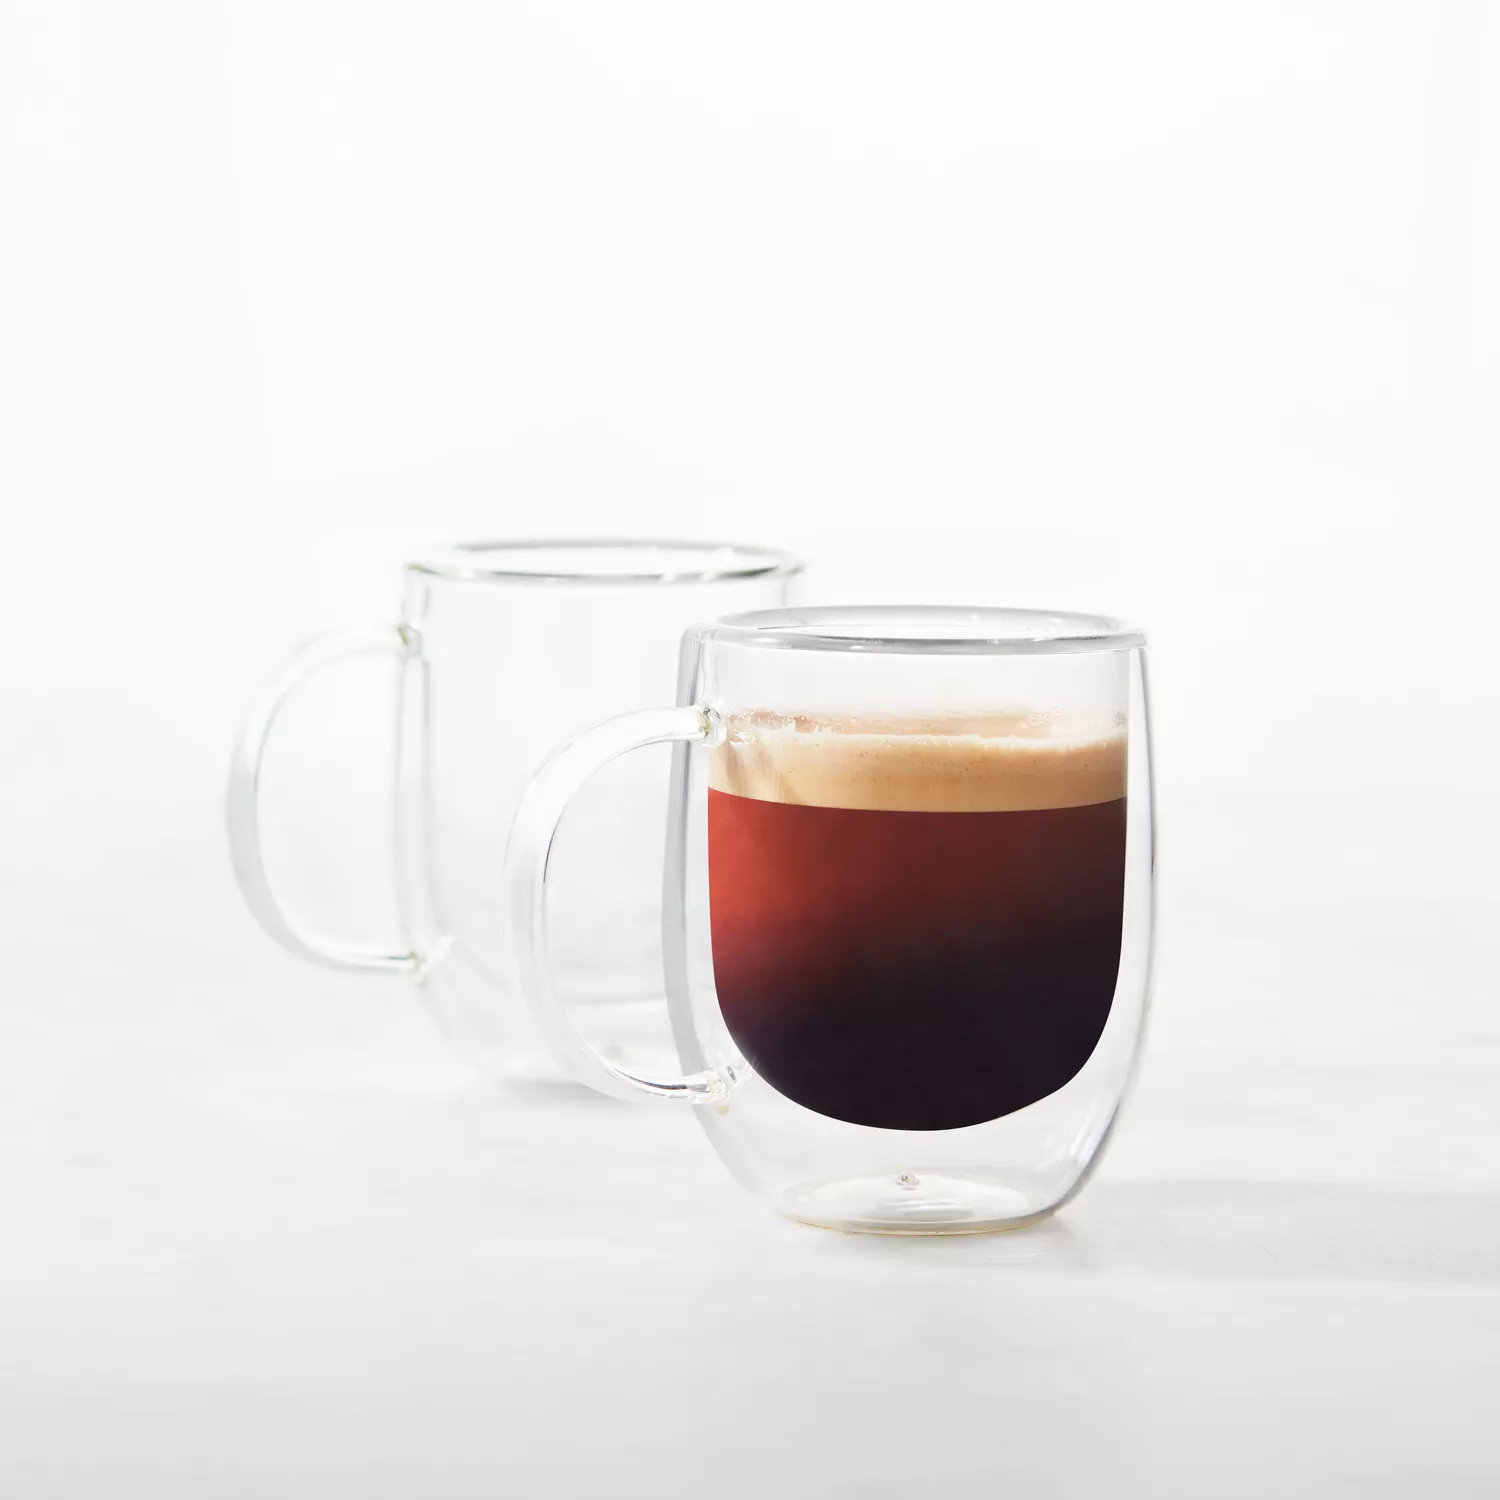 De'Longhi Espresso Cups, Double Wall Thermal Glasses, 2 oz, Set of 2 - -  Espresso Machine Experts